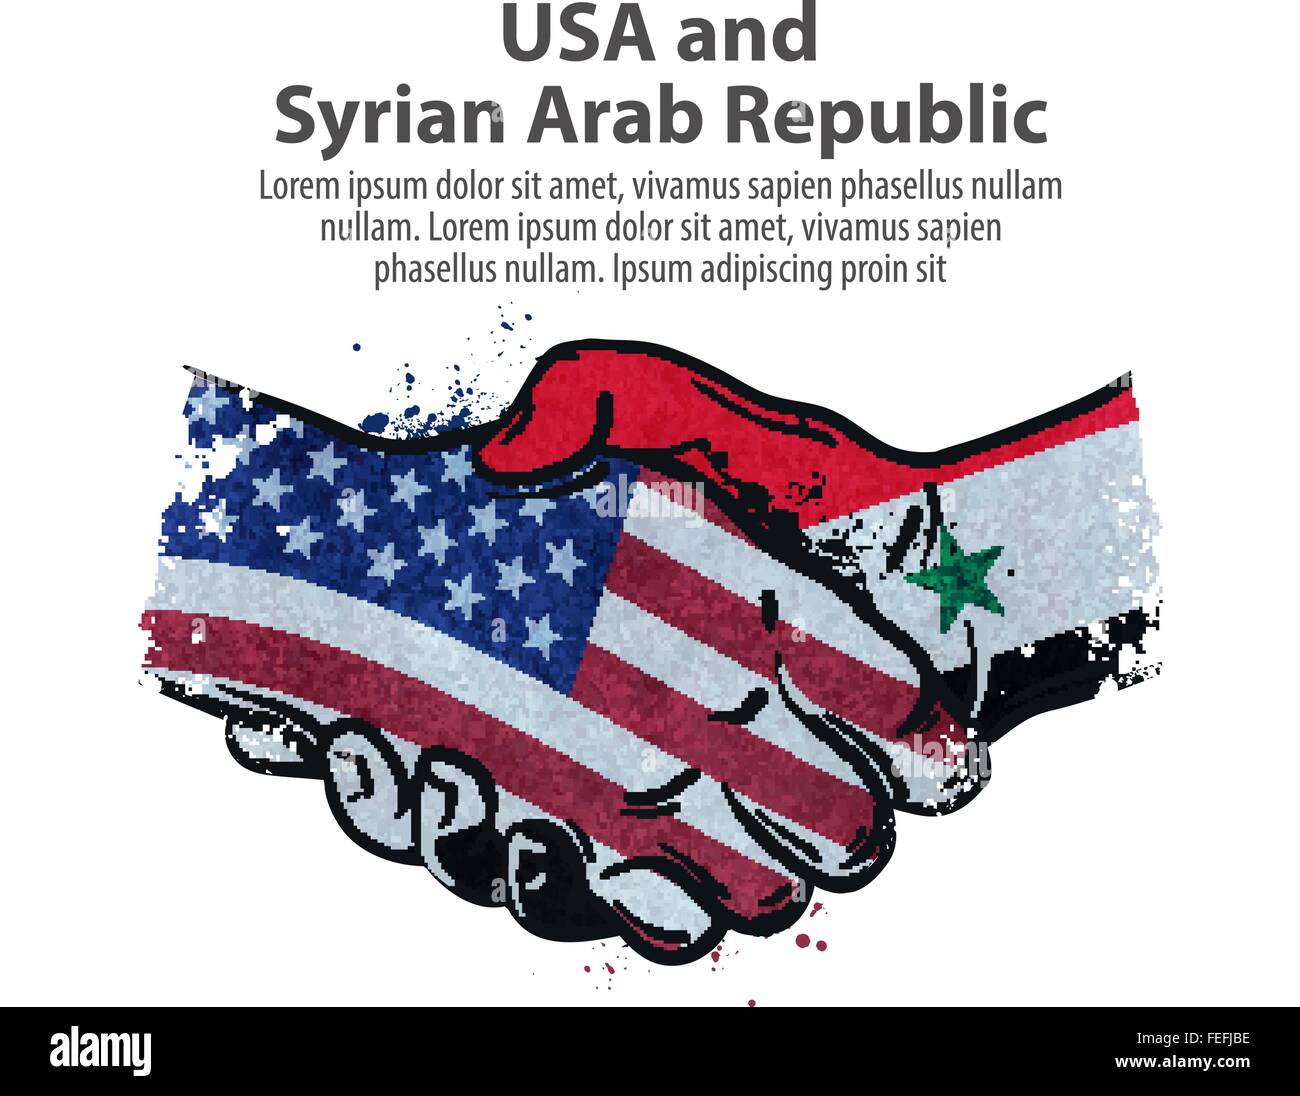 Stretta di mano. Stati Uniti e Siria. illustrazione vettoriale Illustrazione Vettoriale